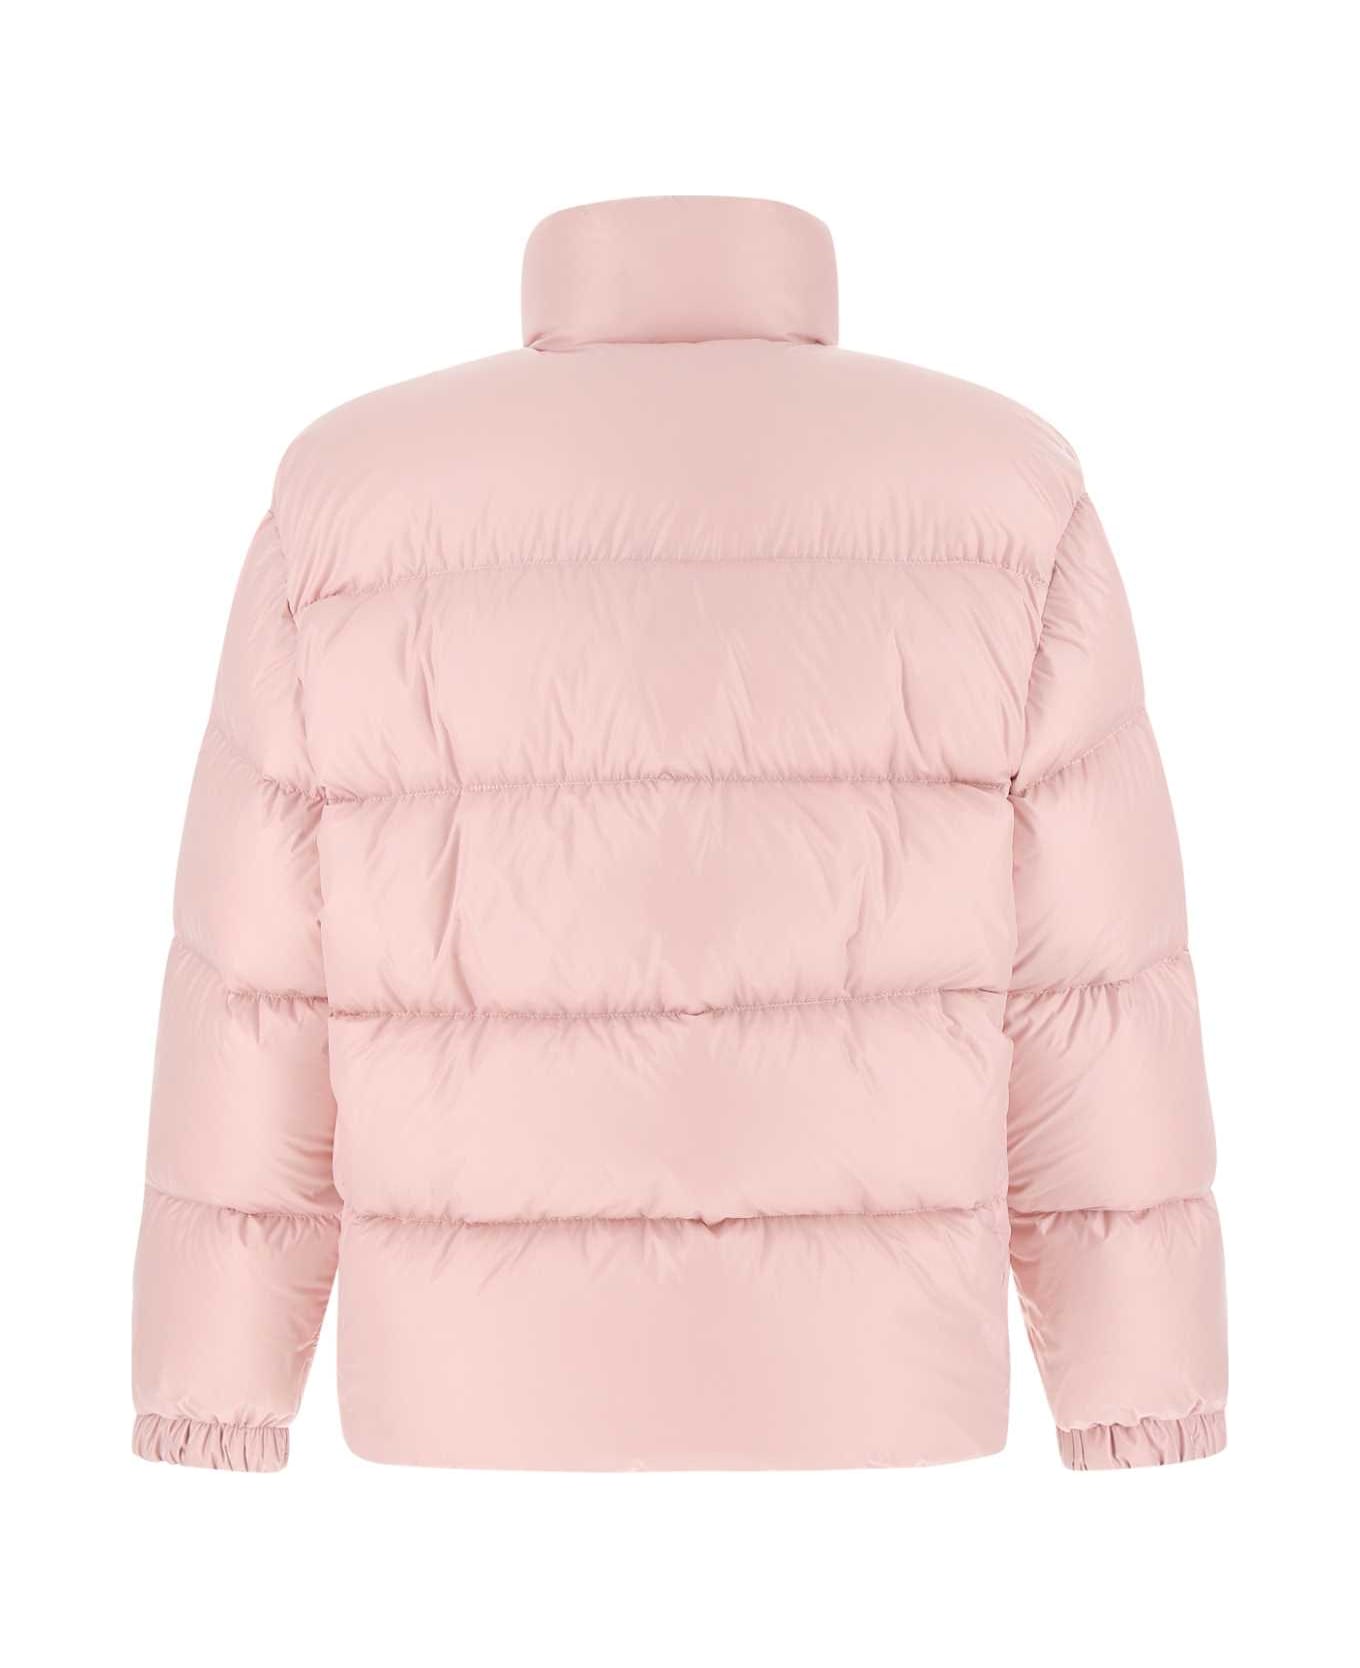 Prada Pink Recycled Polyester Down Jacket - F0E18 ダウンジャケット